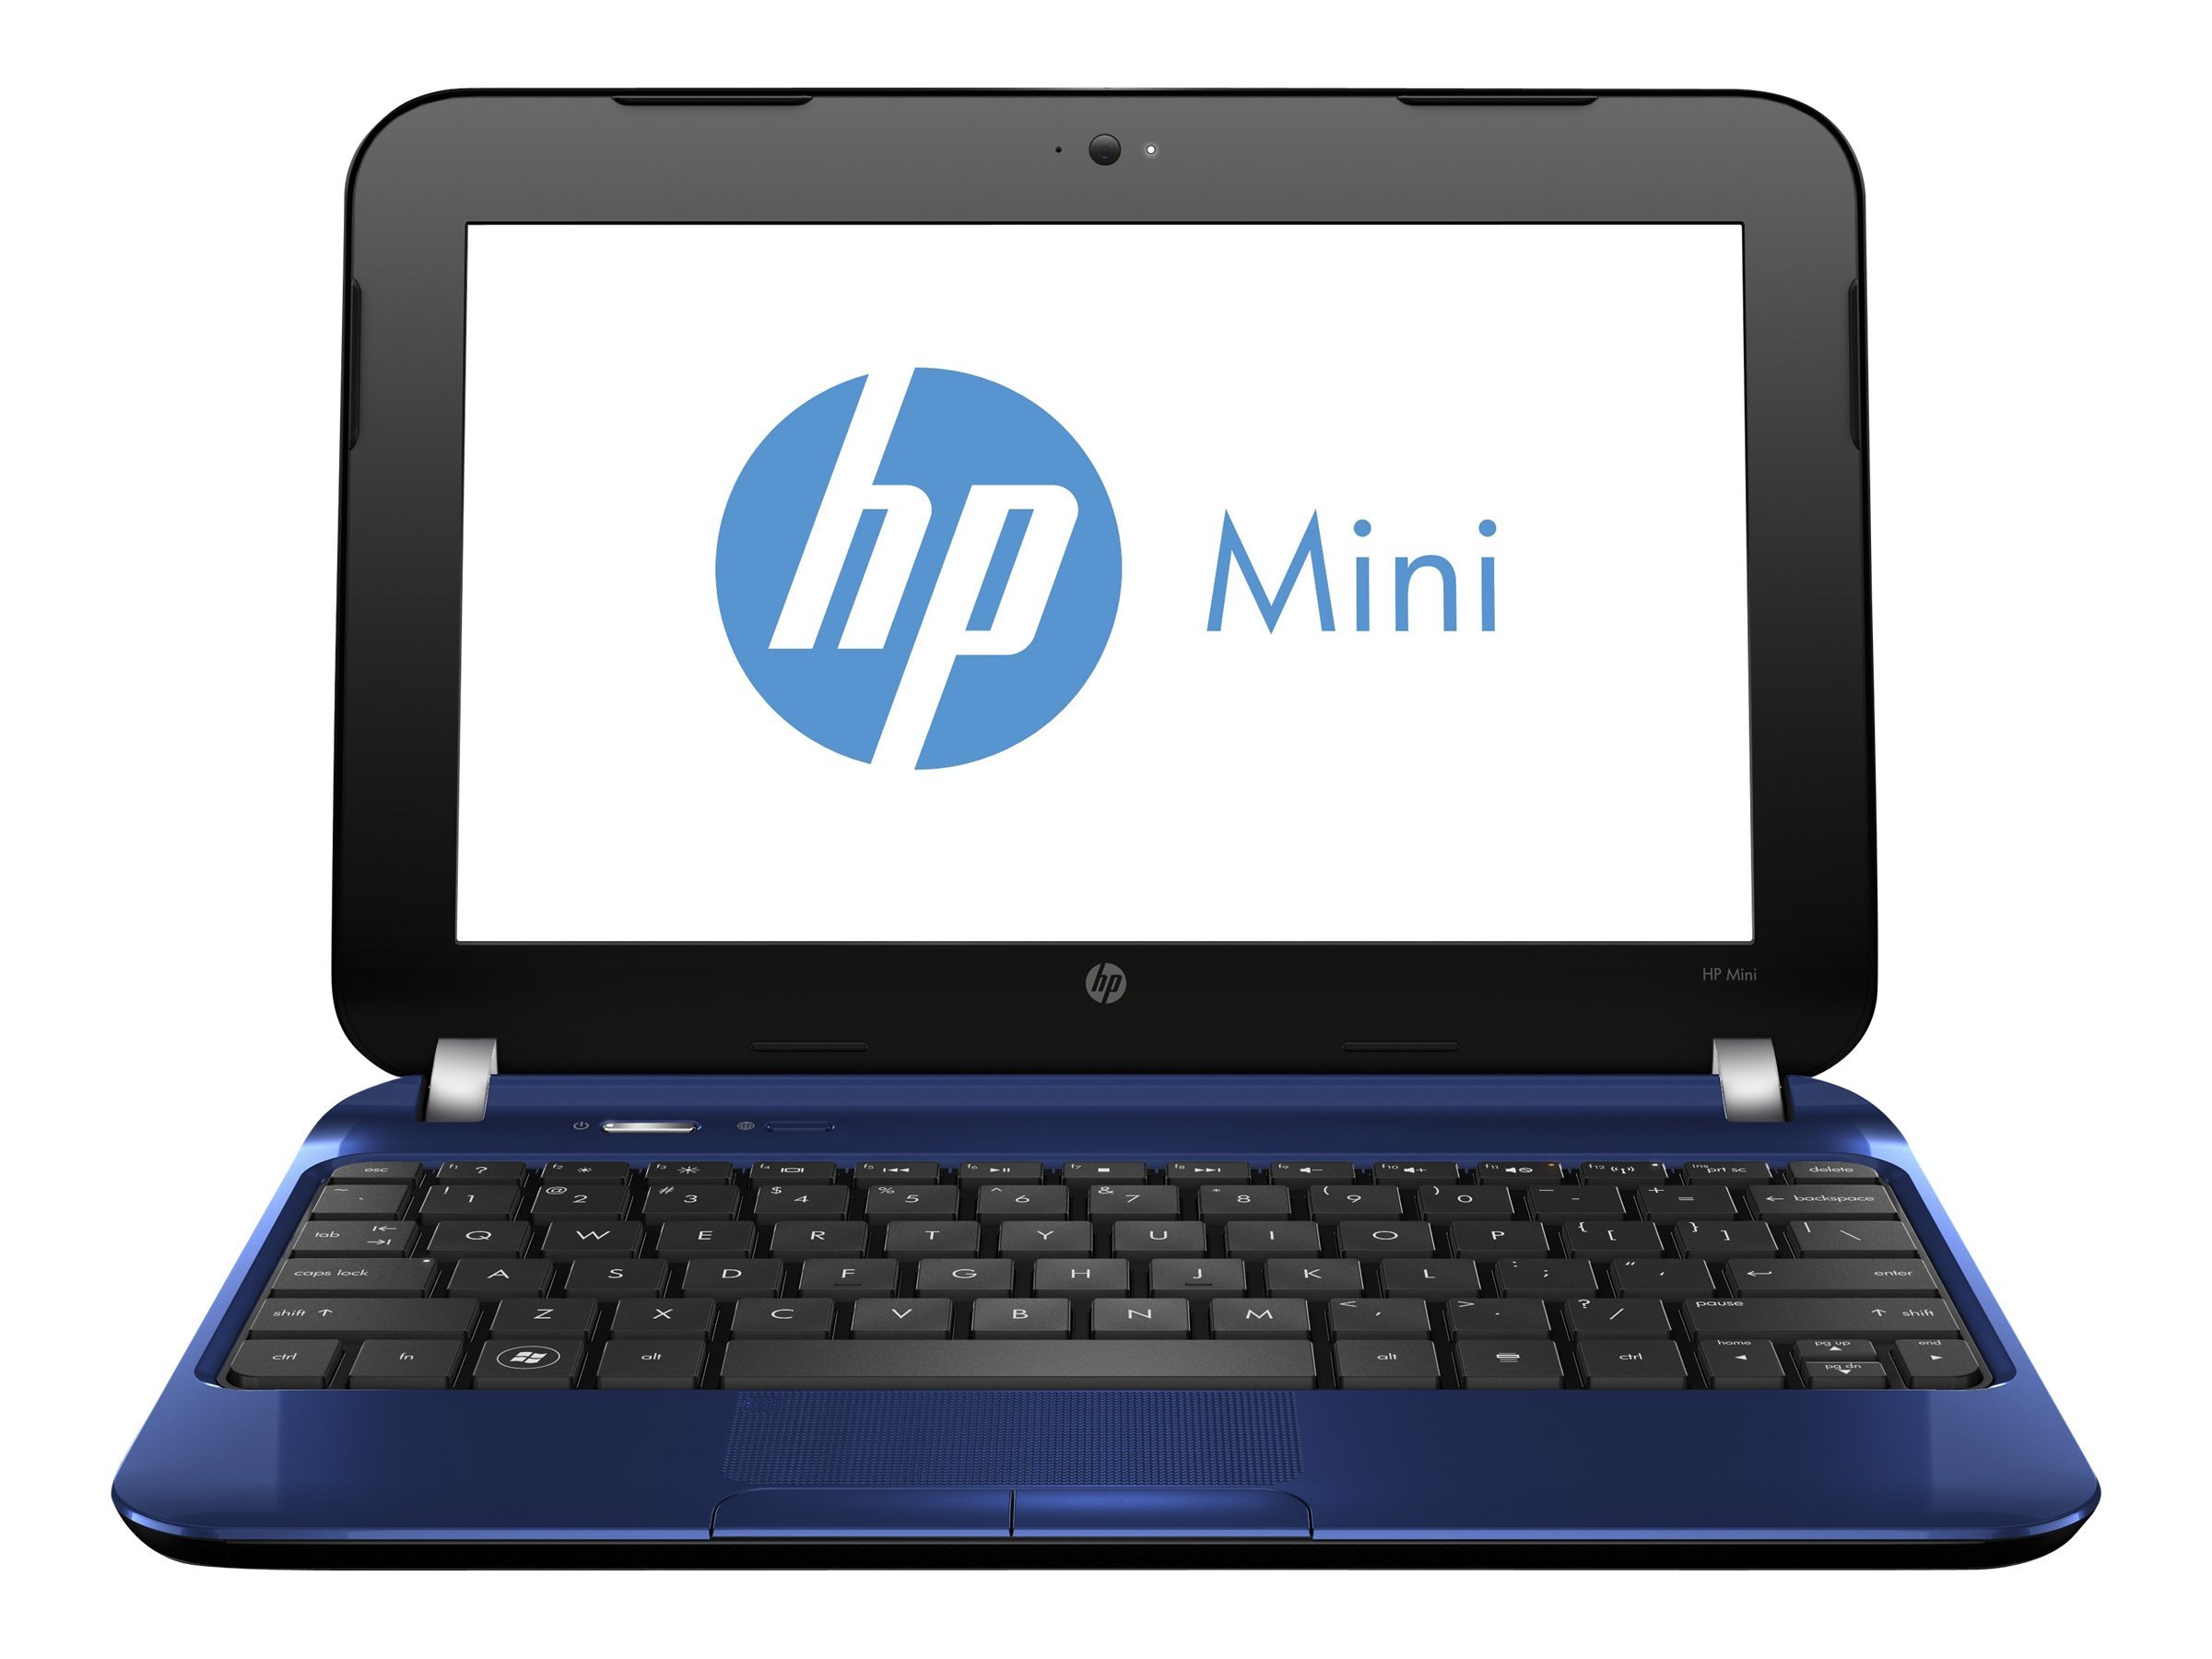 Review: HP Mini 110